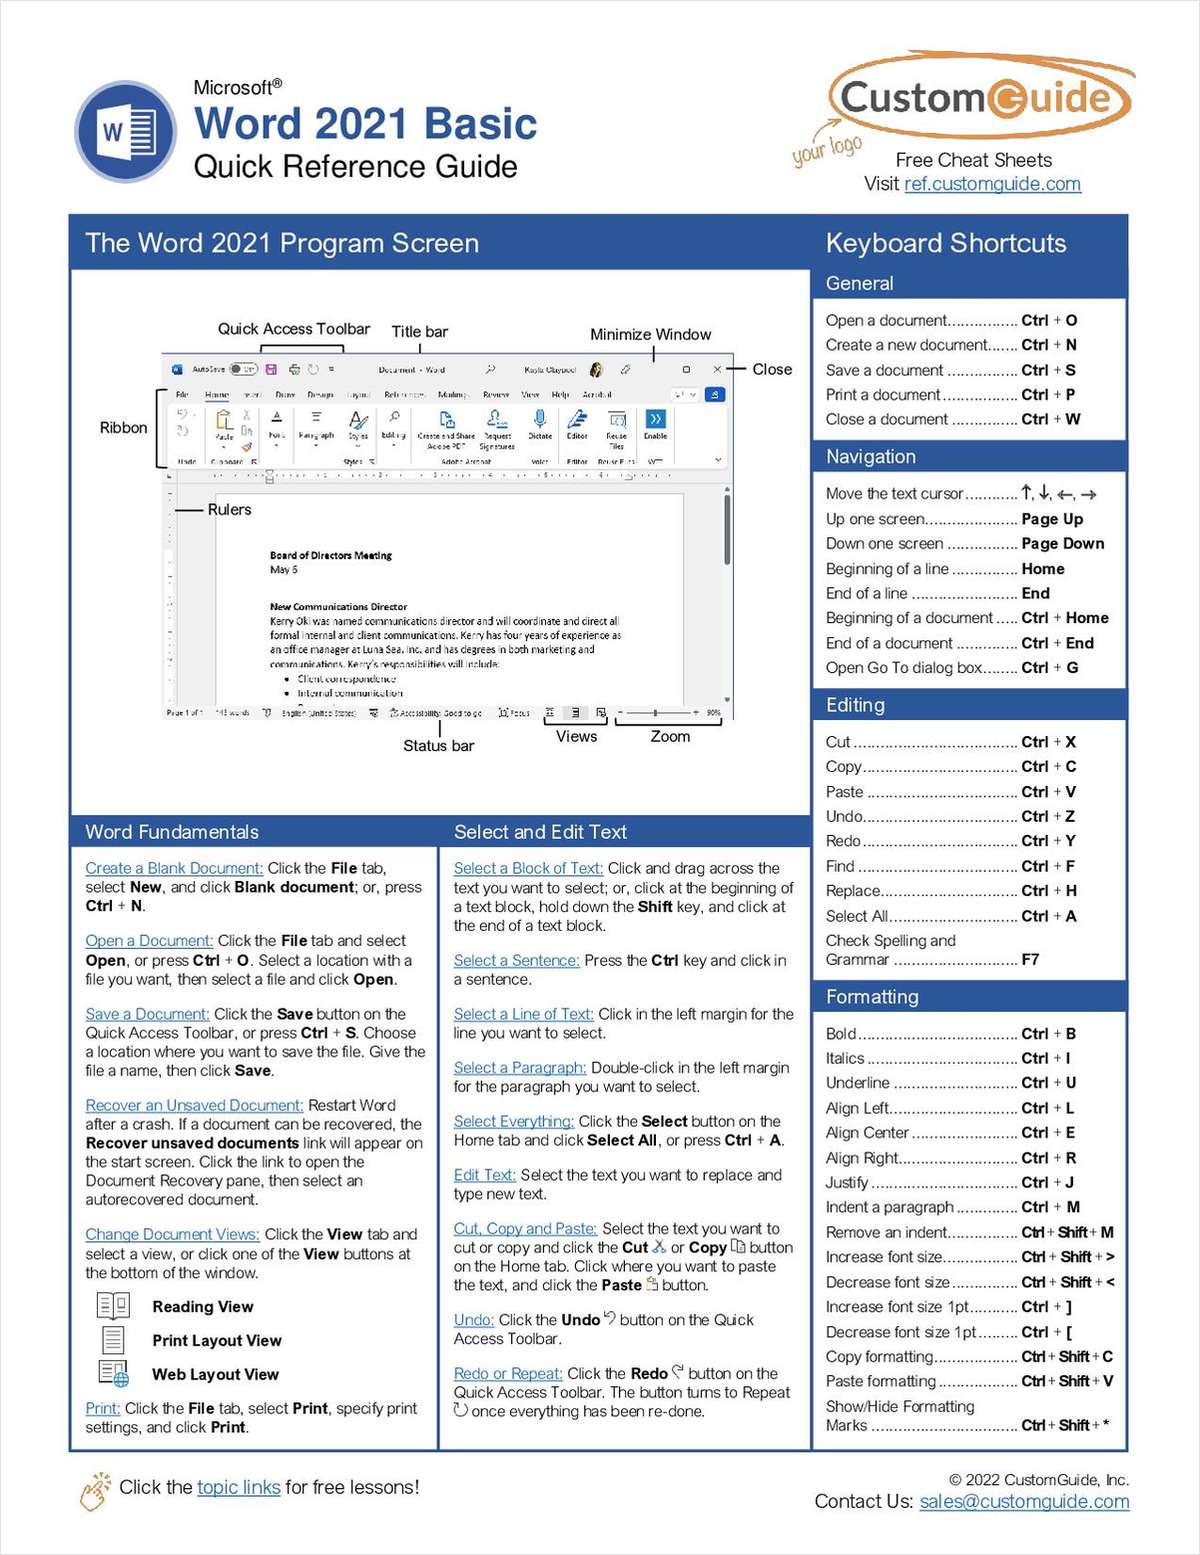 Microsoft Word 2021 Basic -- Free Reference Card